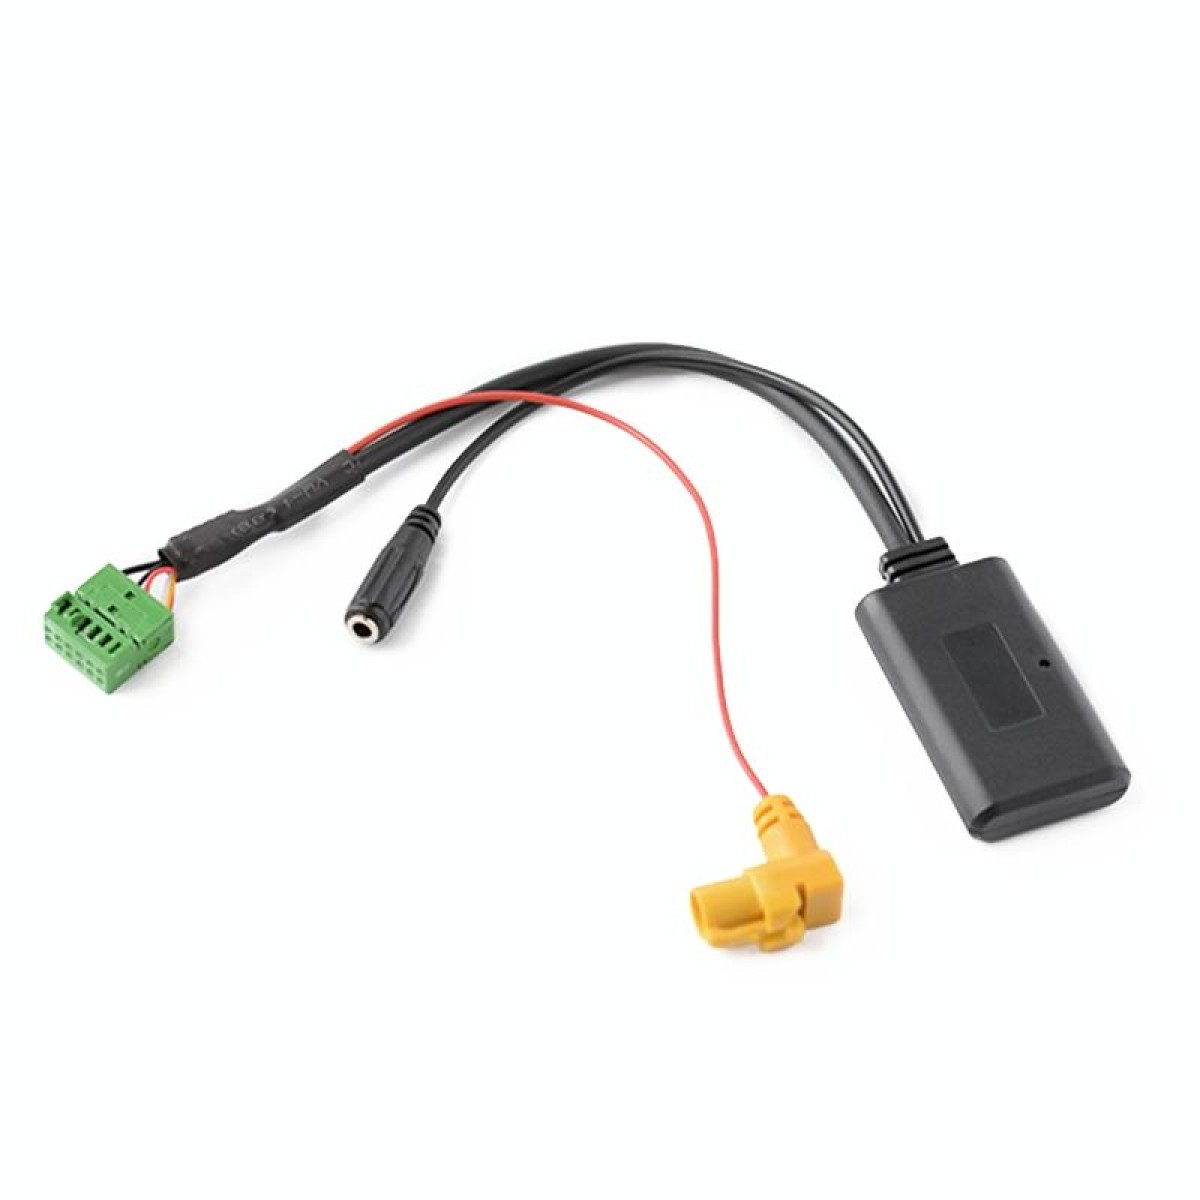 Car MMI3G AMI Bluetooth Music AUX Audio Cable + MIC for Audi Q5 A6L A4L Q7 A5 S5